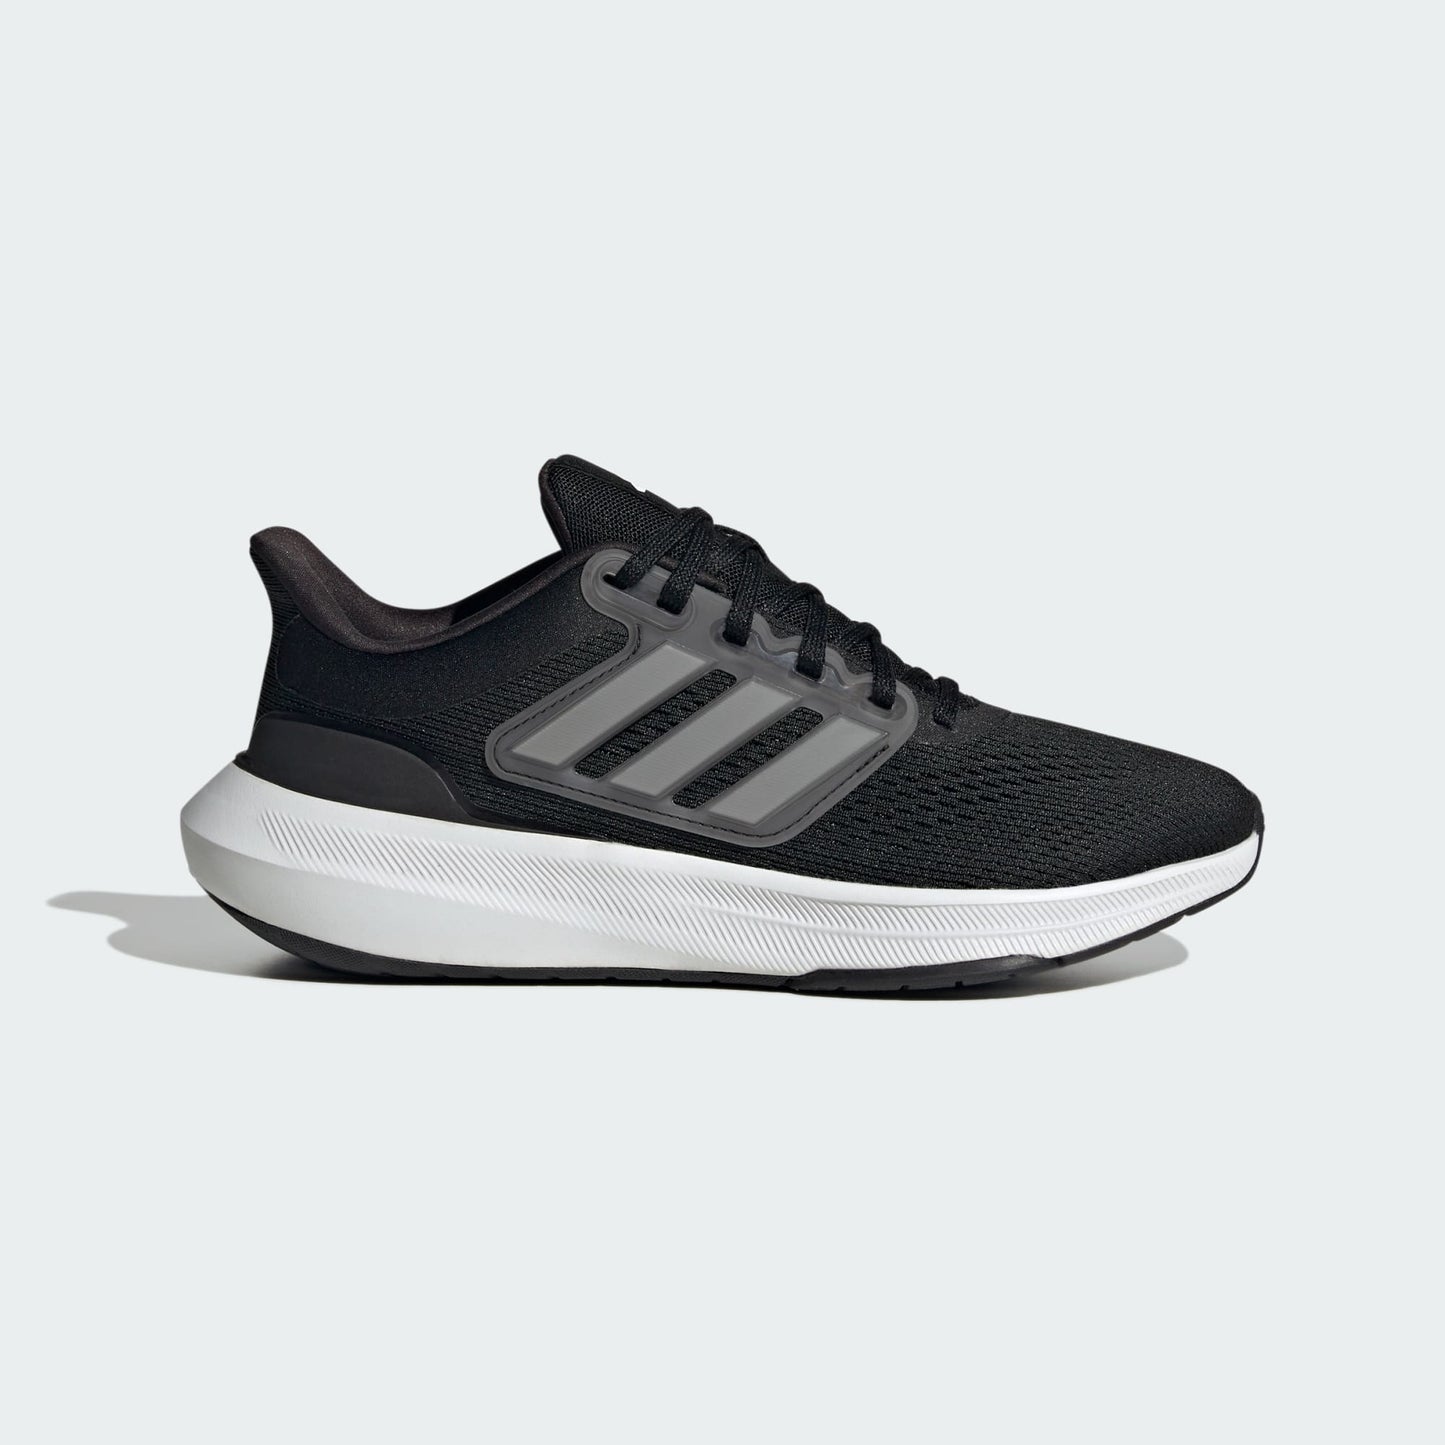 Adidas Women's Ultrabounce Running Shoes, Core Black / Cloud White / Core Black